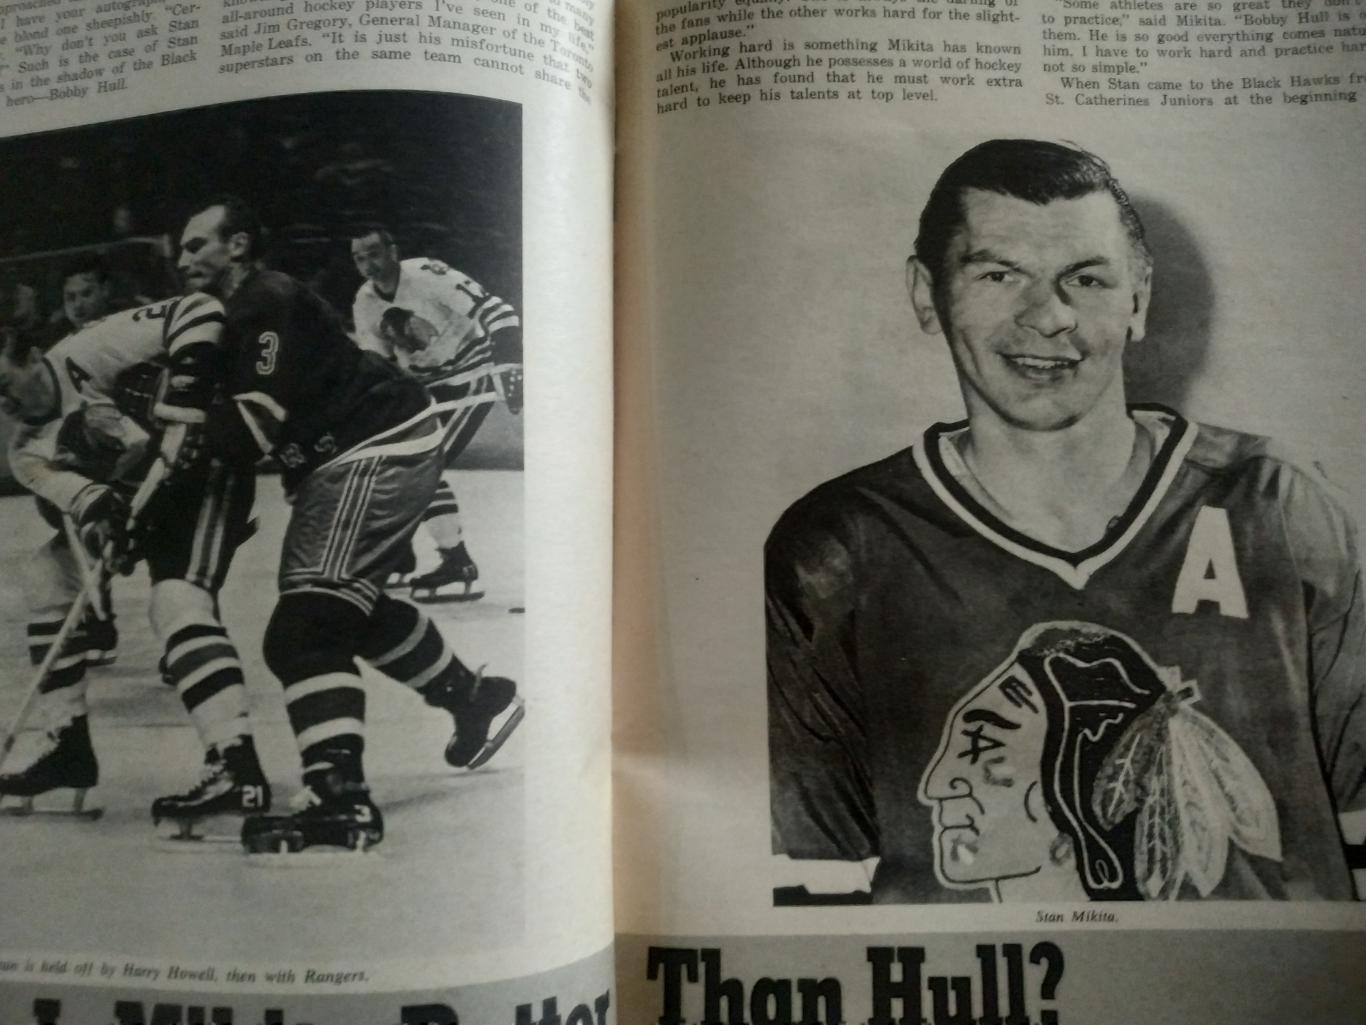 ЖУРНАЛ НХЛ СПОРТ СПЕШИАЛ ХОККЕЙ APR 1971 NHL SPORTS SPECIAL HOCKEY 7